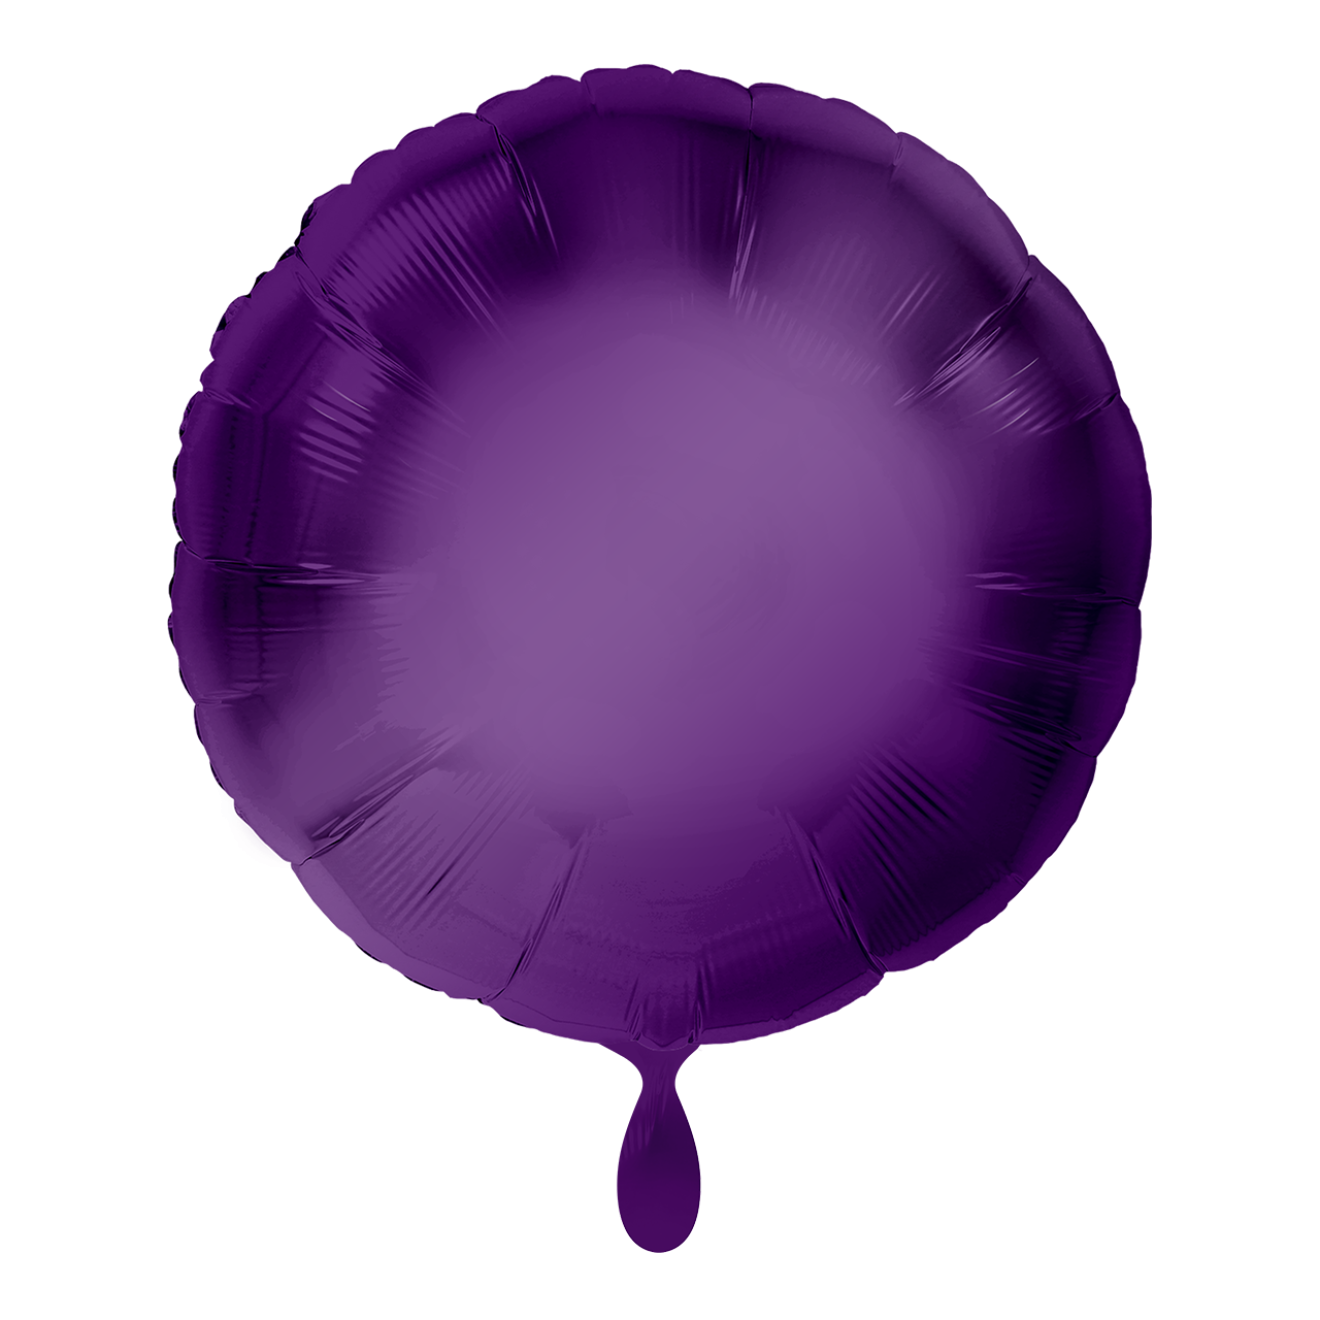 1 Balloon - Rund - Lila